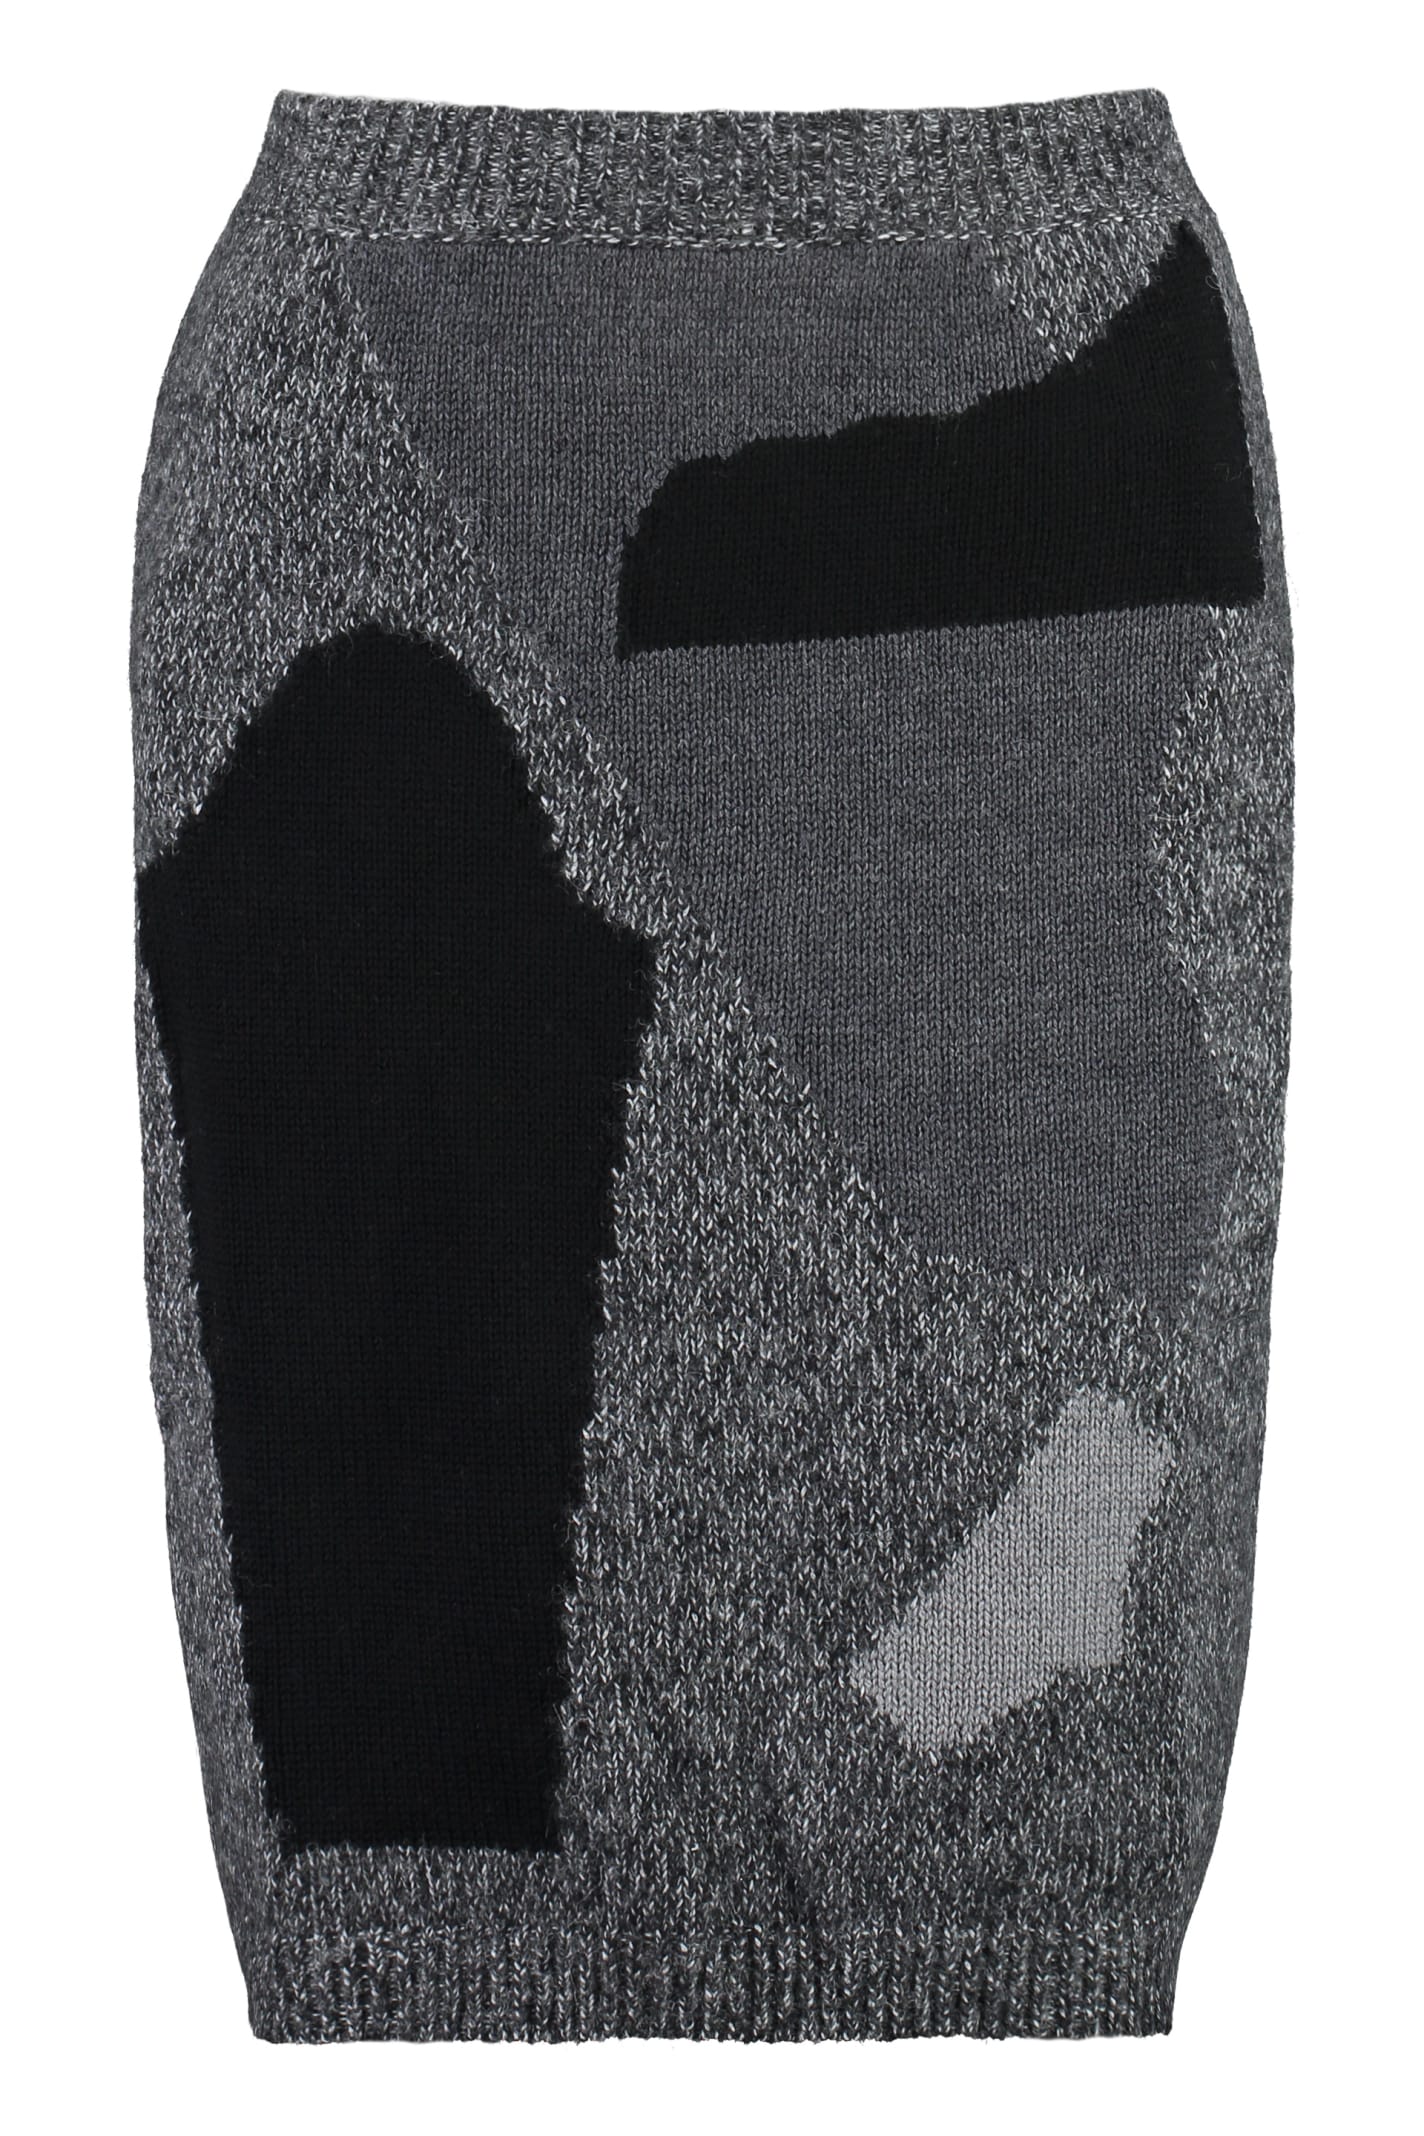 Moschino Knit Skirt